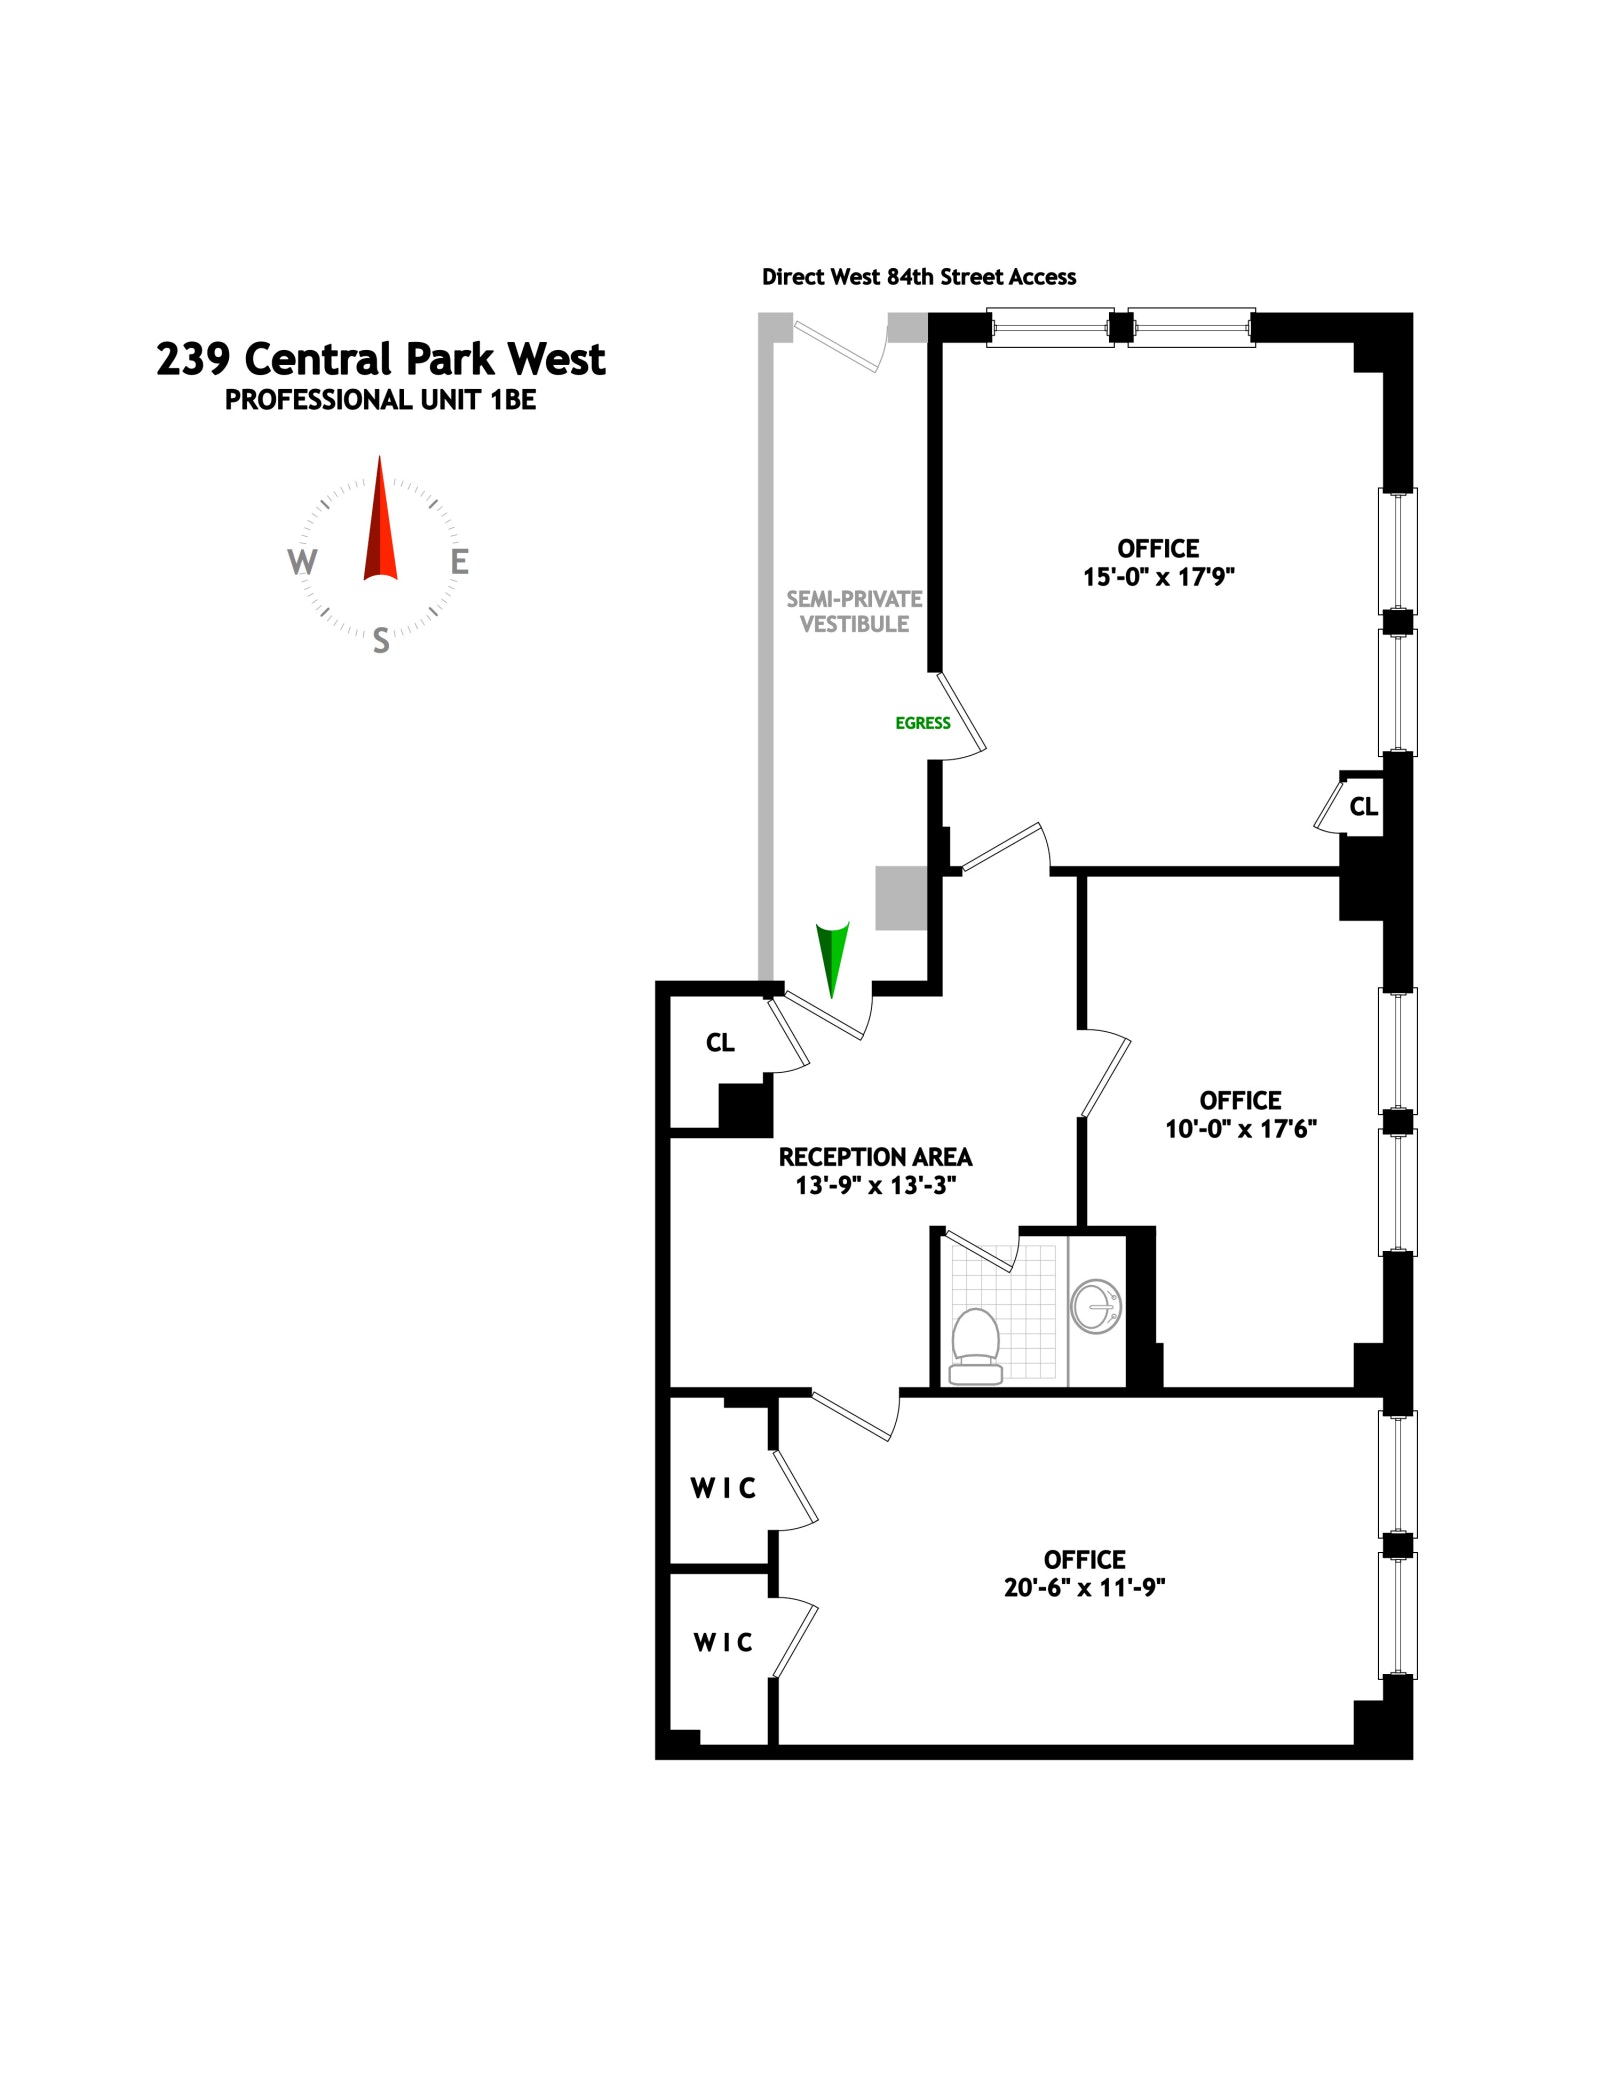 Floorplan for 239 Central Park West, 1BE